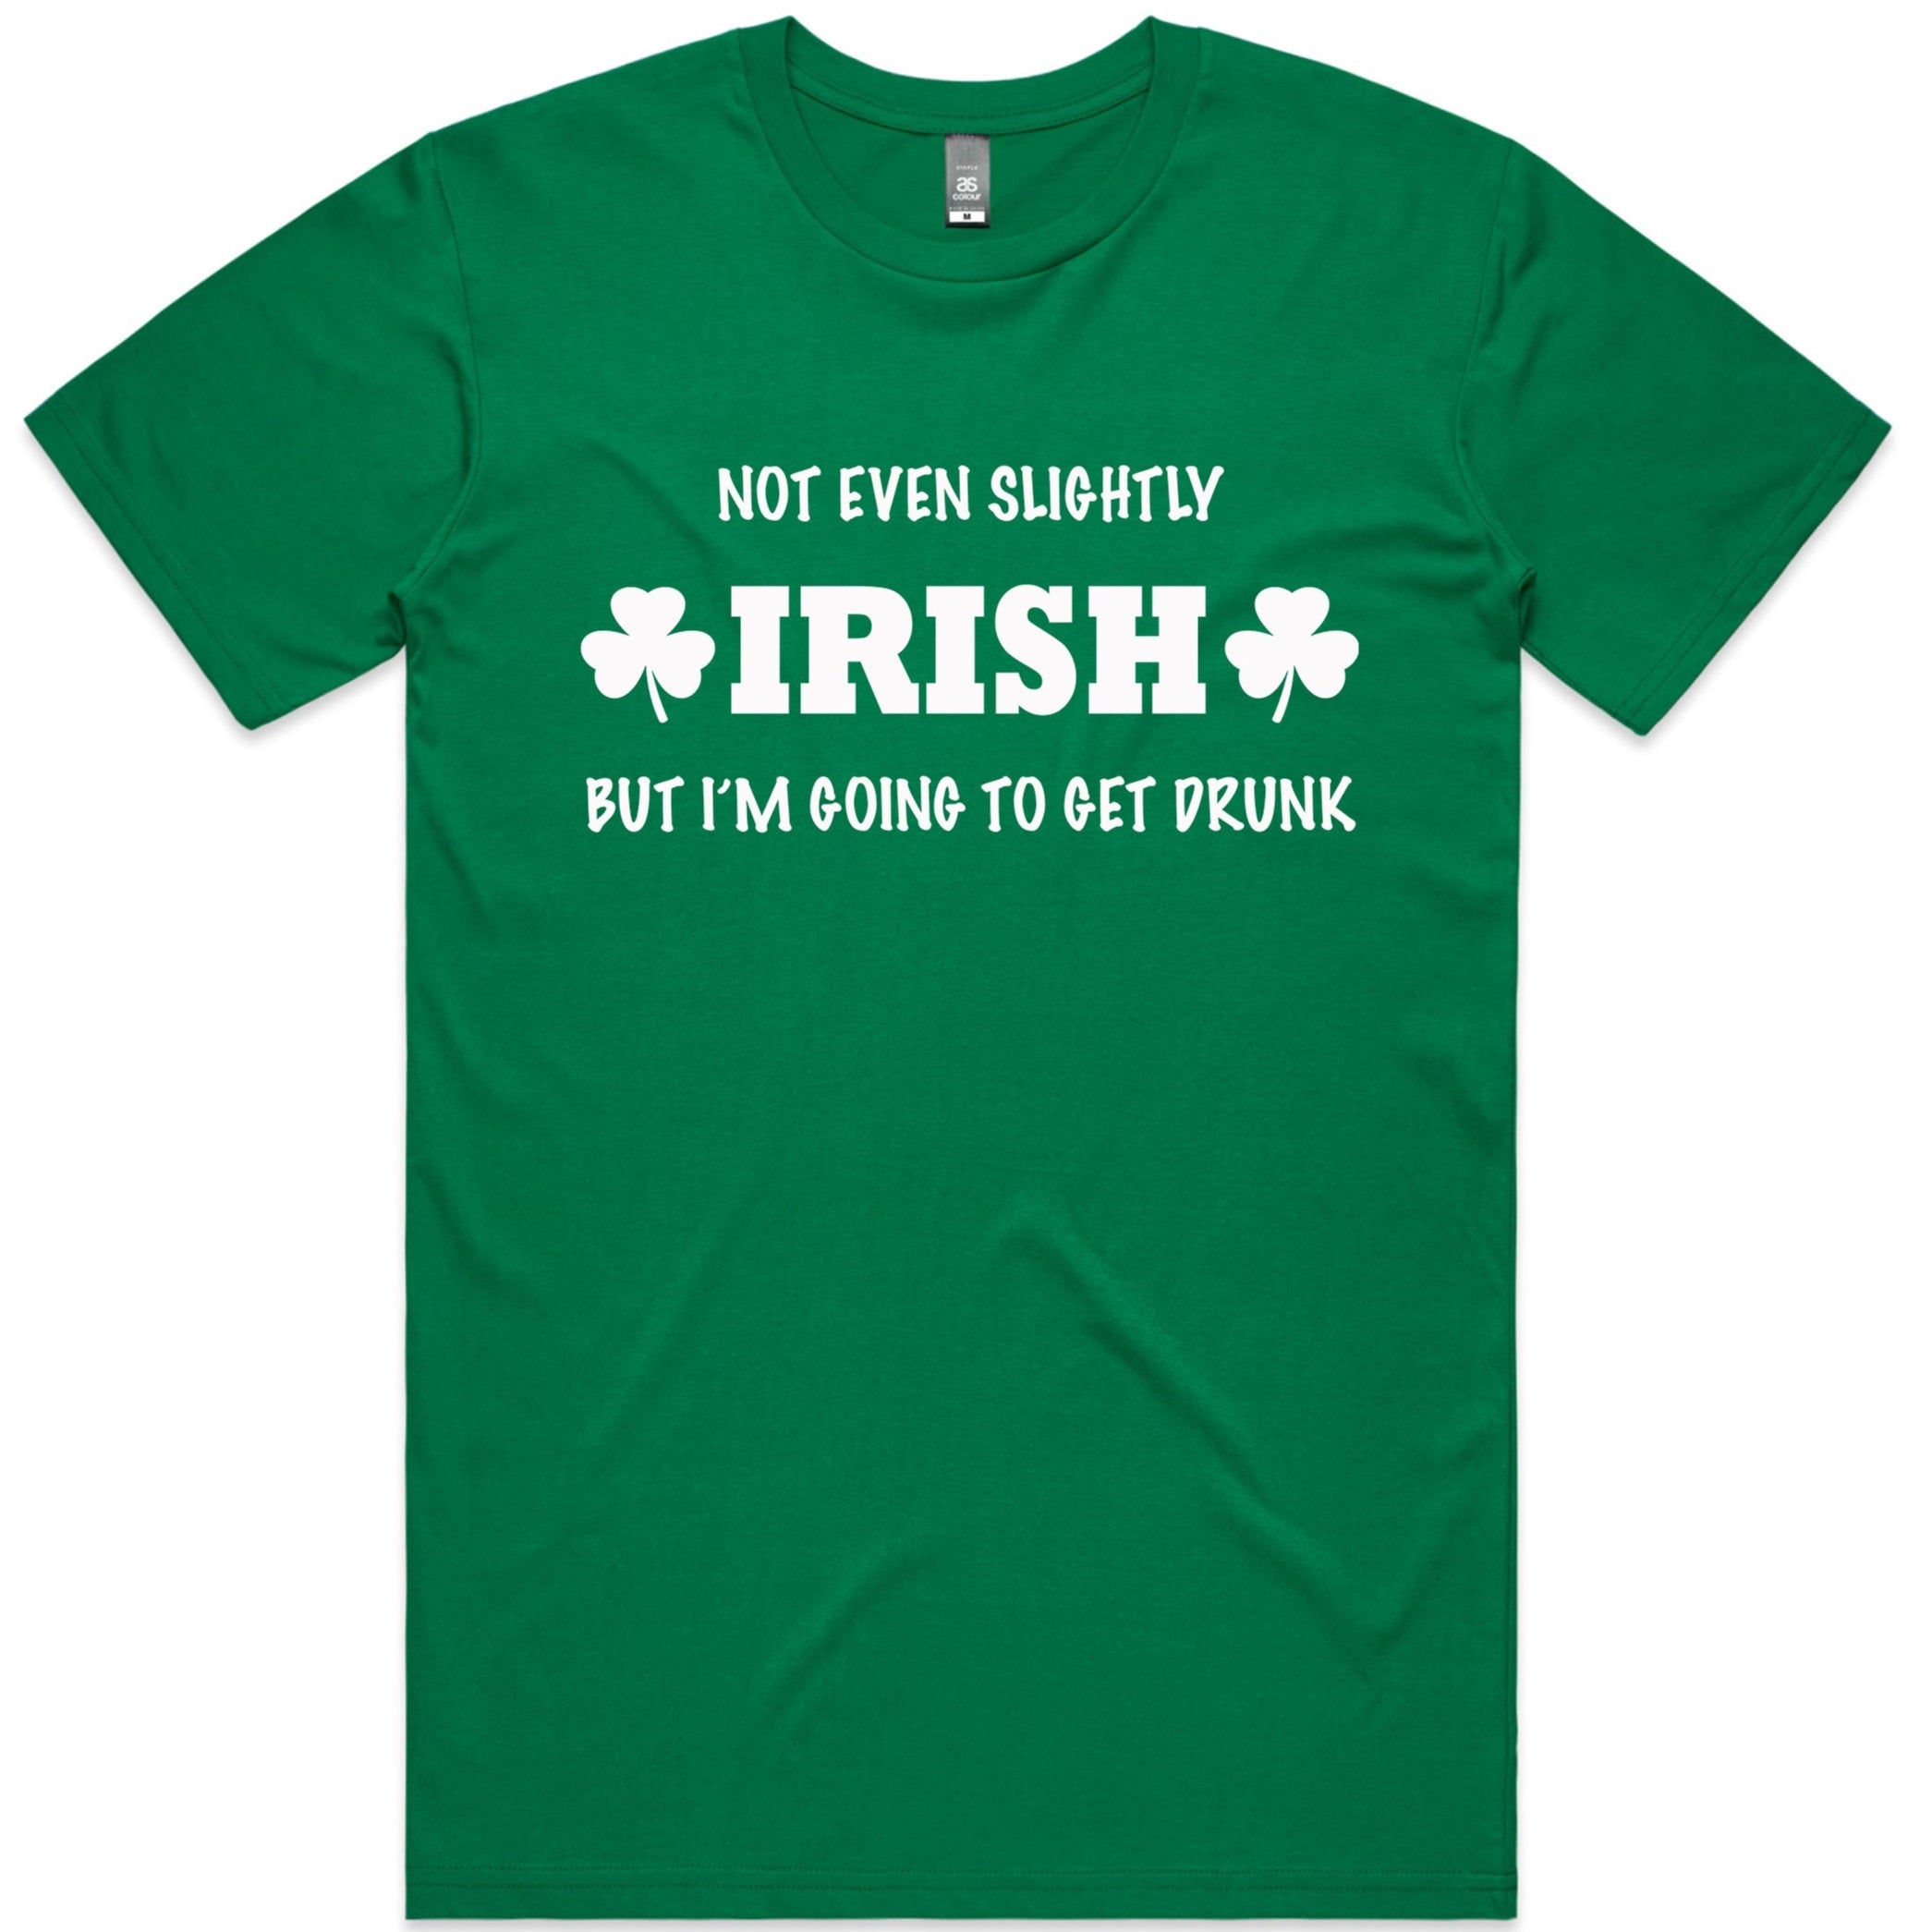 NOT EVEN SLIGHTLY IRISH TSHIRT